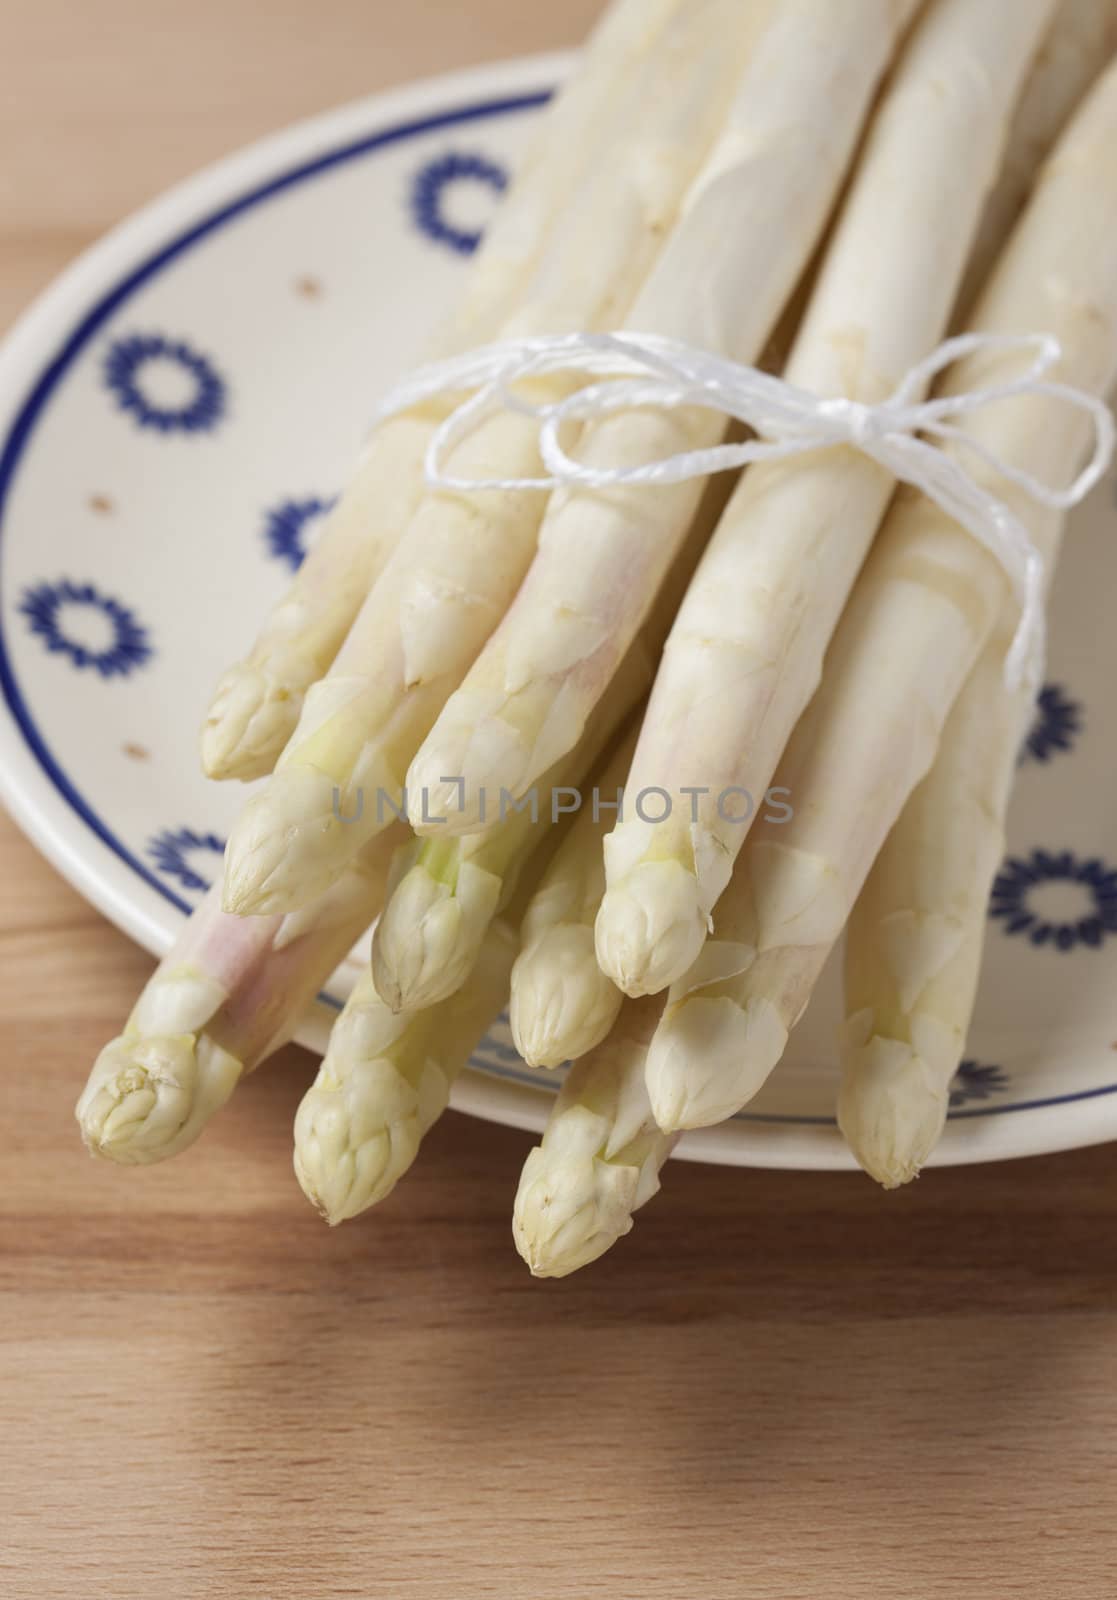 White Asparagus by biitli